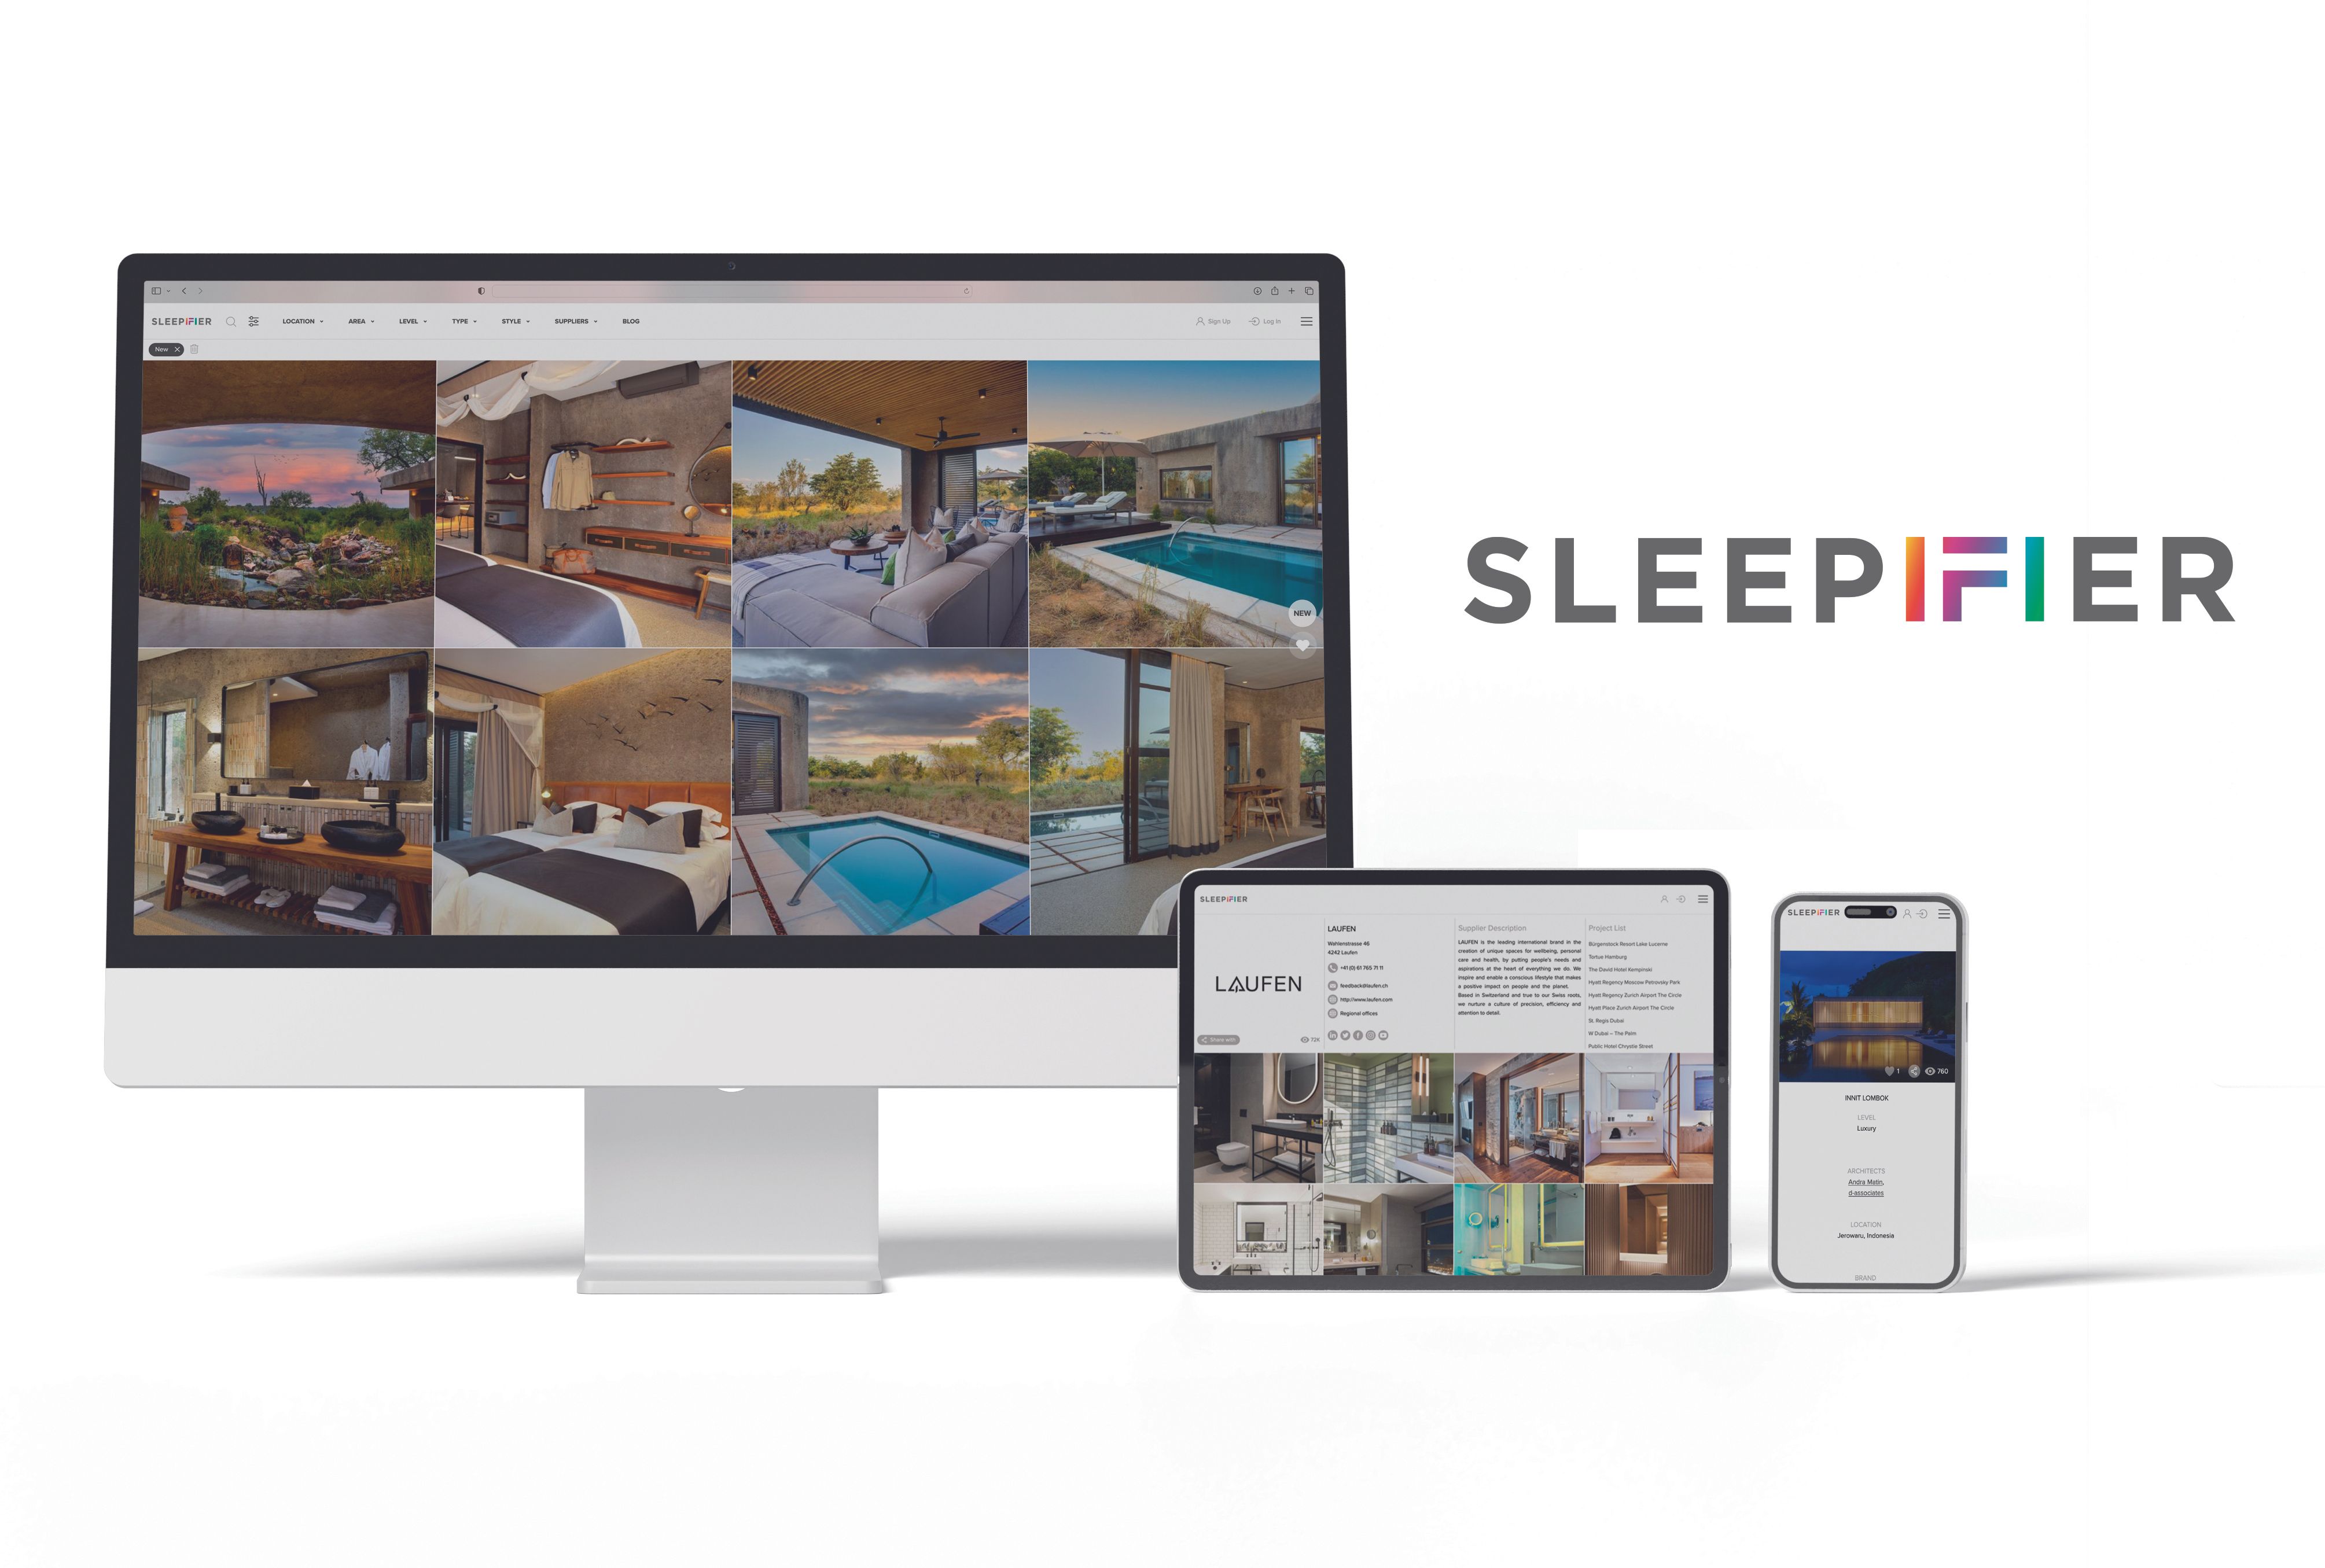 Sleeper Media launches digital hospitality archive Sleepifier